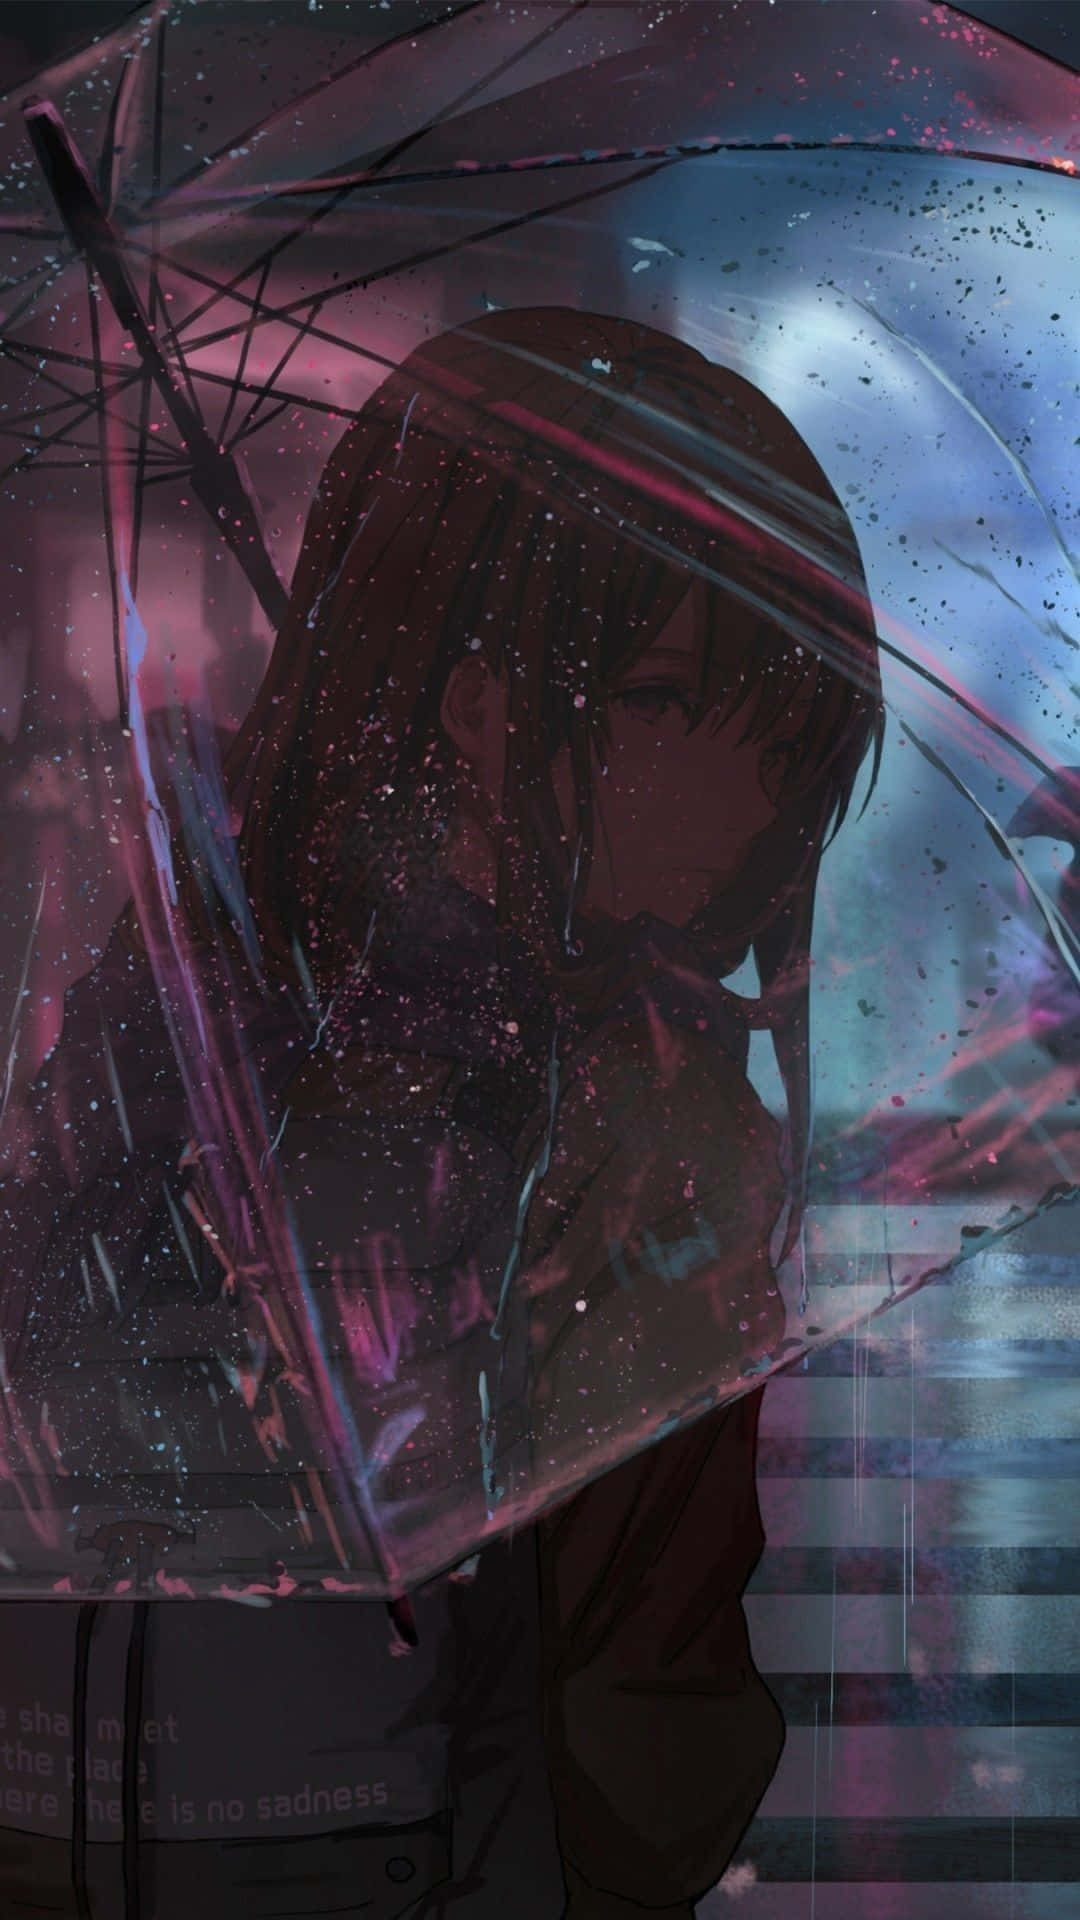 Sad Depressing Anime Girl Umbrella Rain Wallpaper